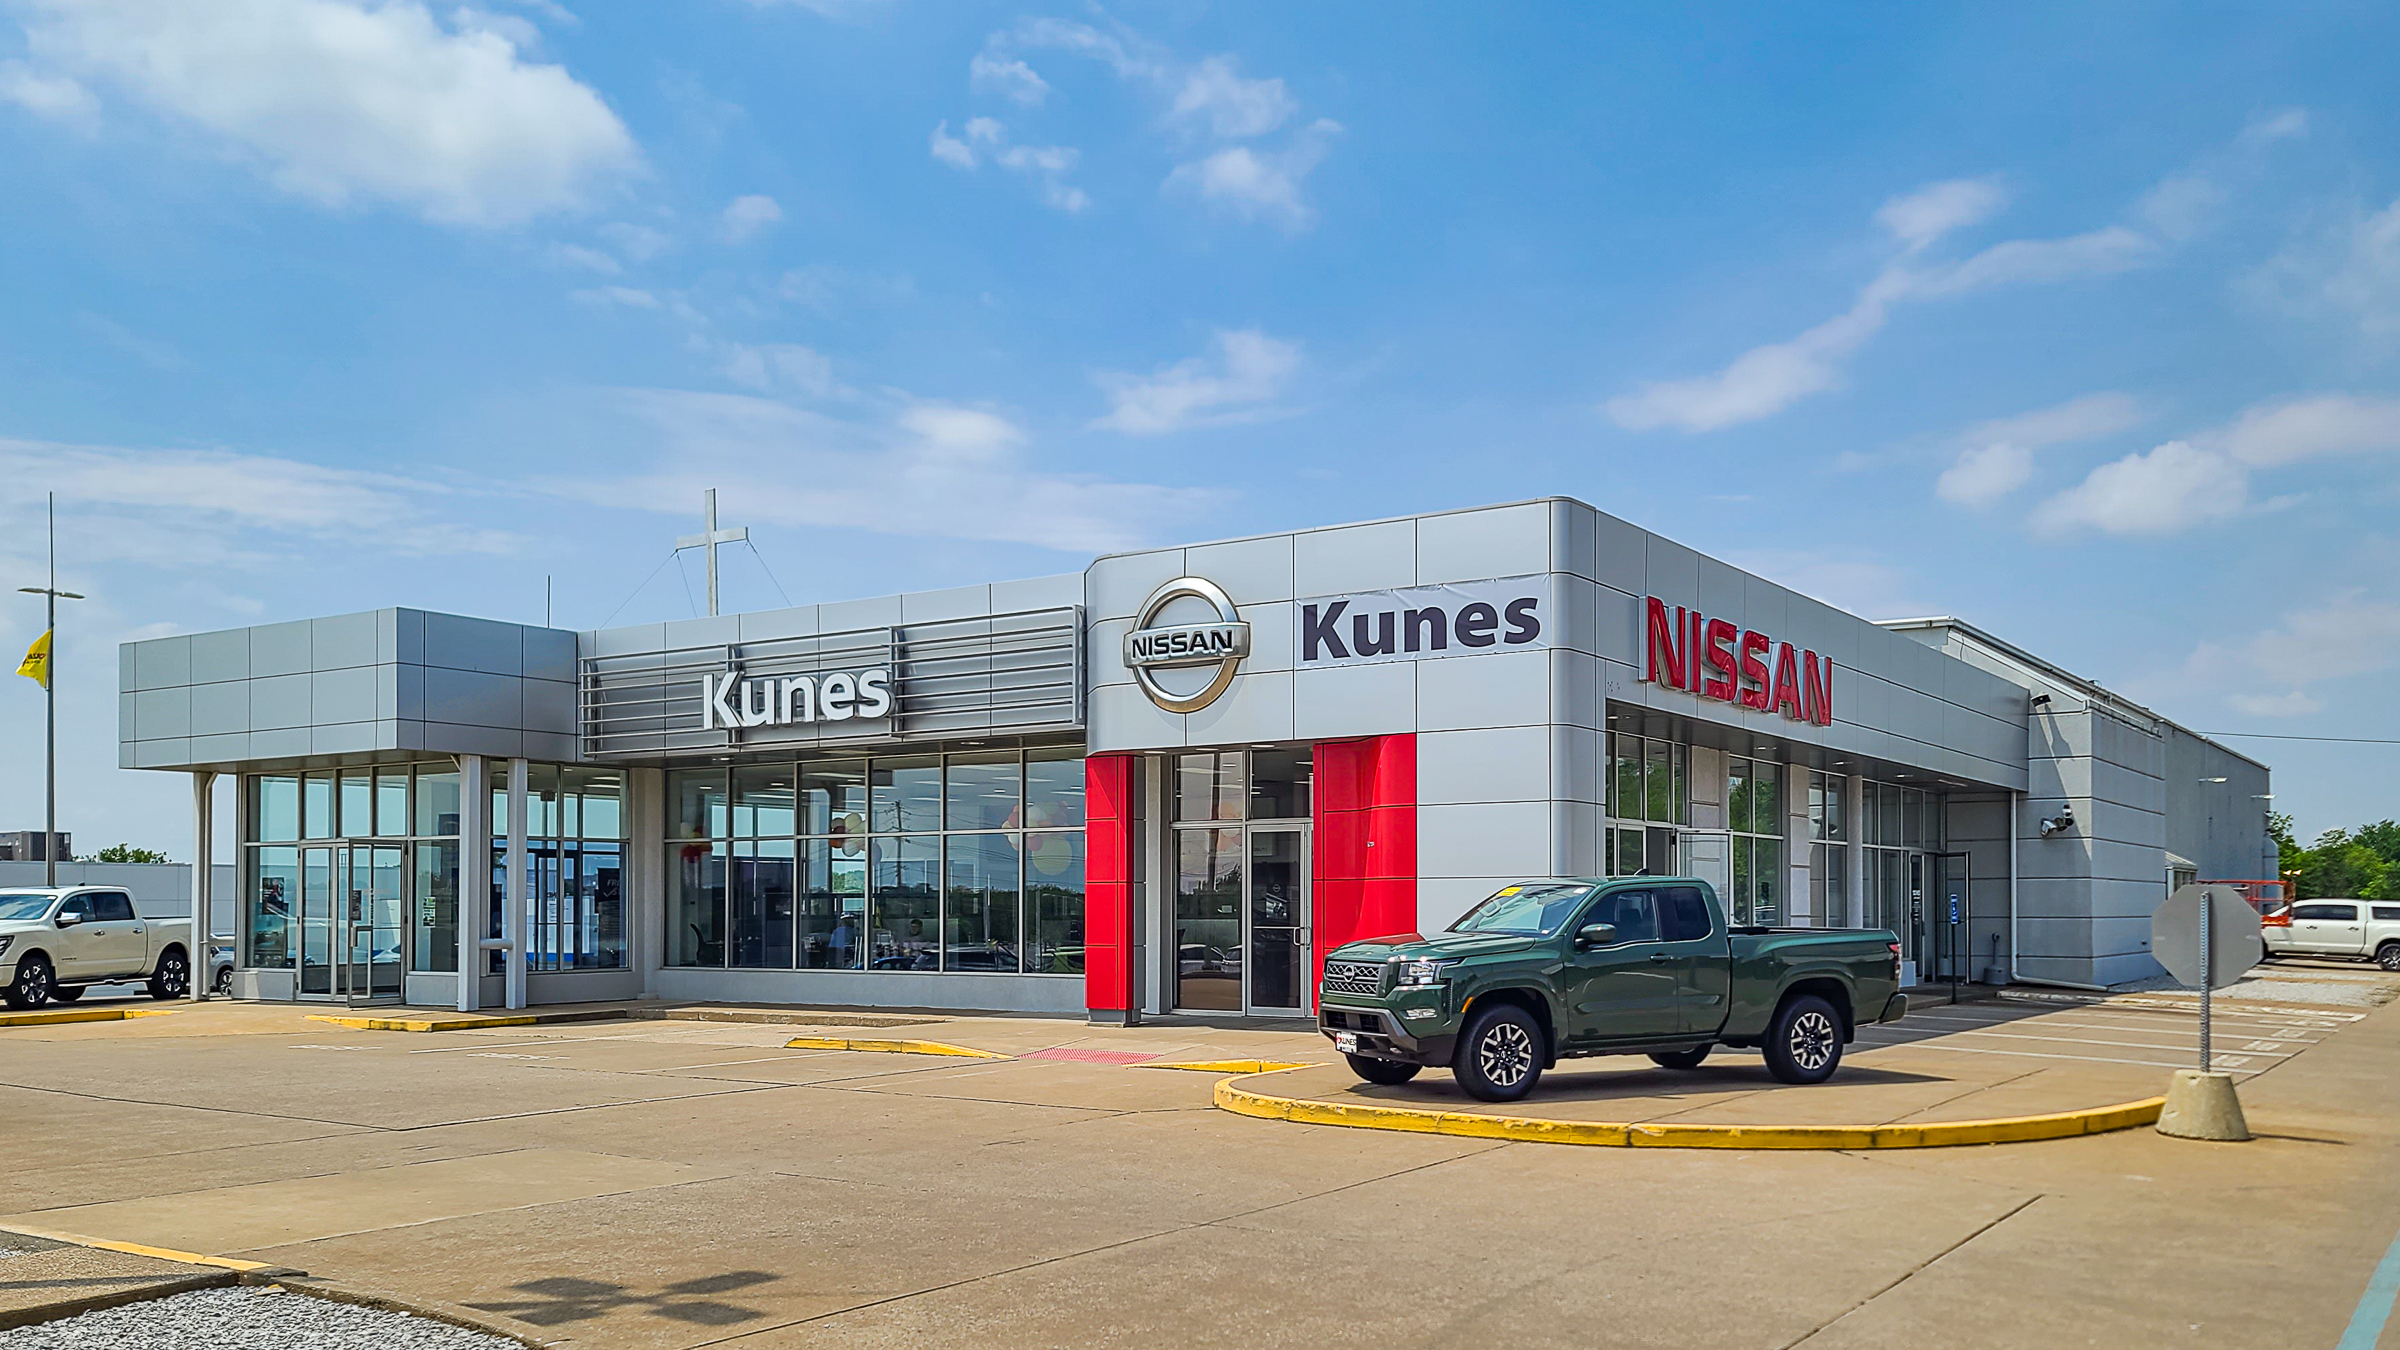 Kunes Nissan of Davenport, Iowa storefront